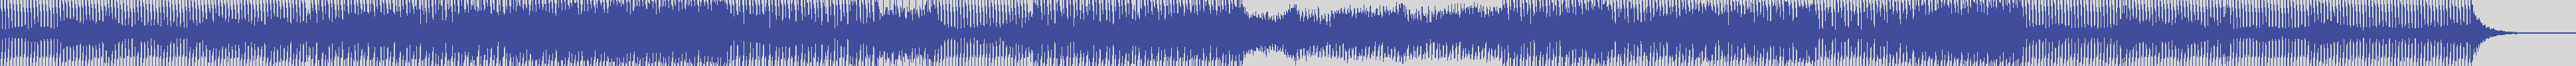 atomic_recordings [AR018] Mowree - People [Original Mix] audio wave form